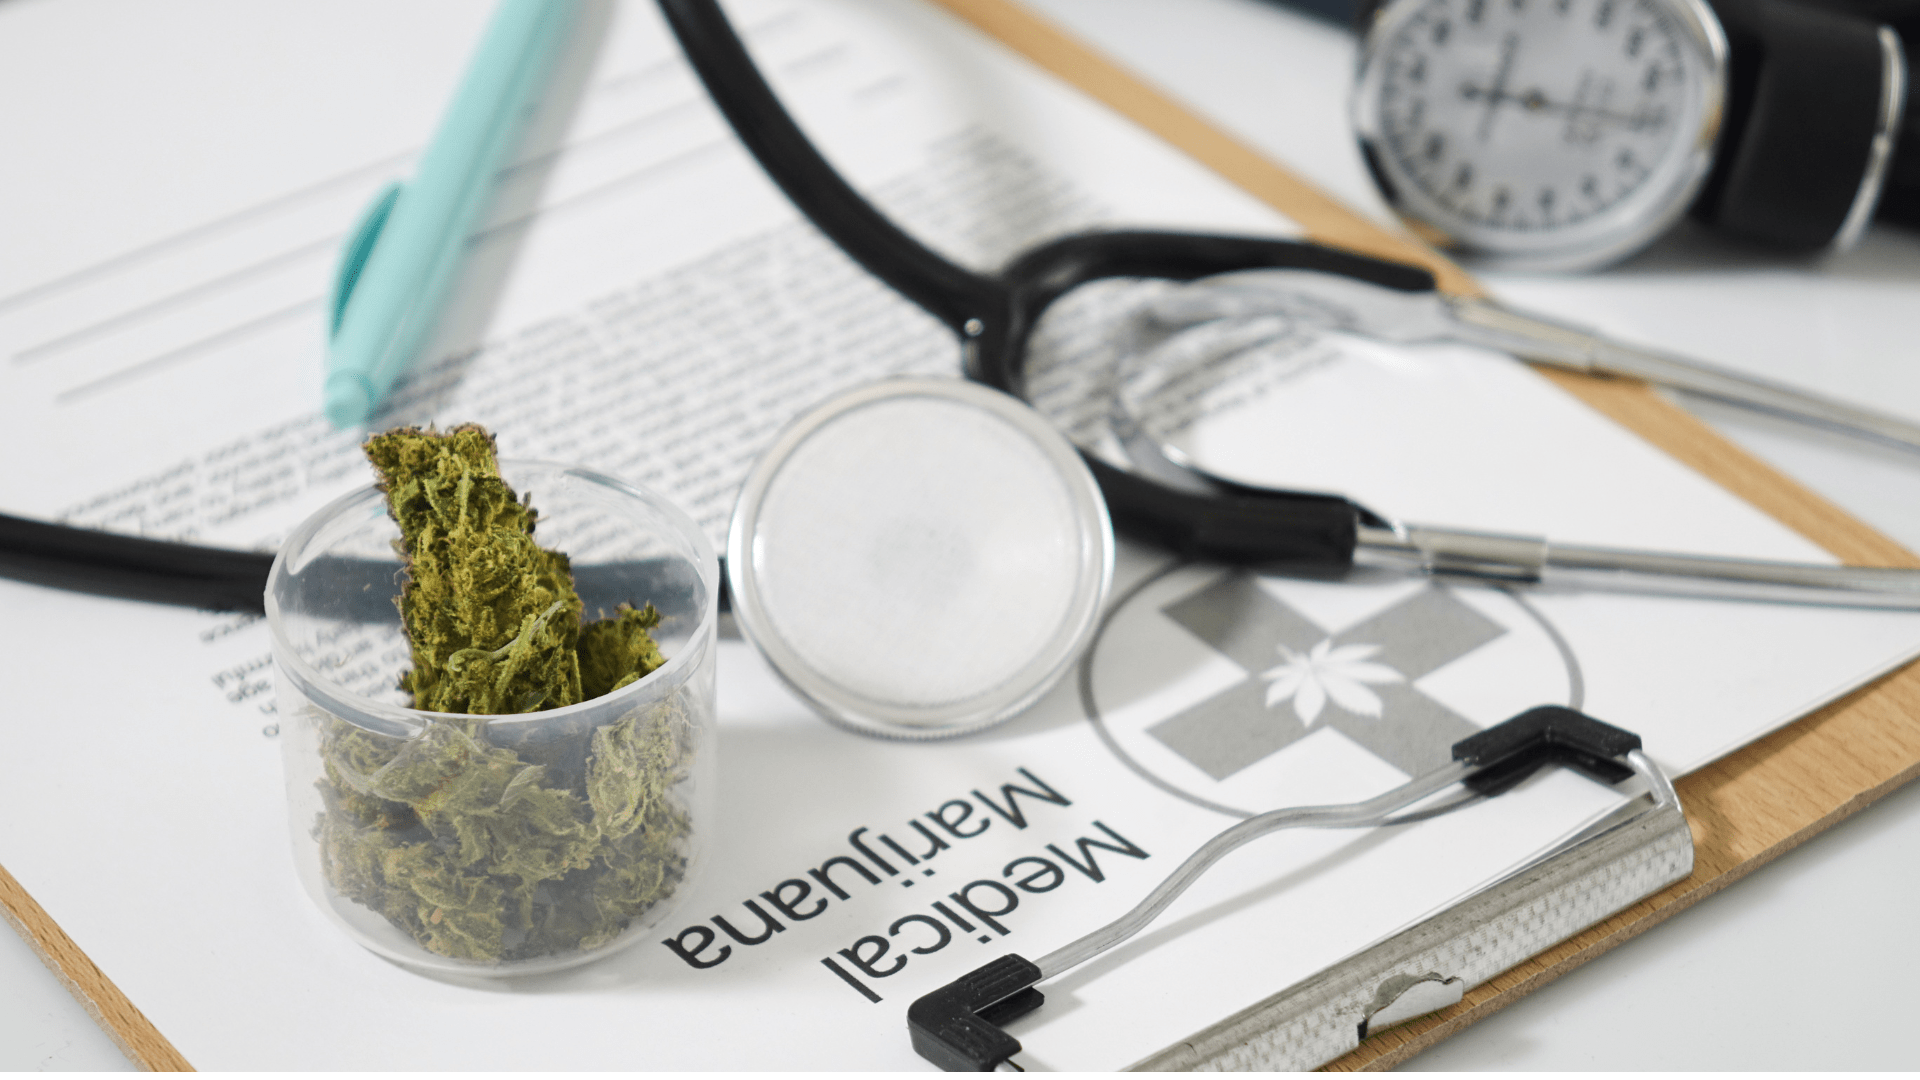 How to check eligibility for a Medical Marijuana Card Naples